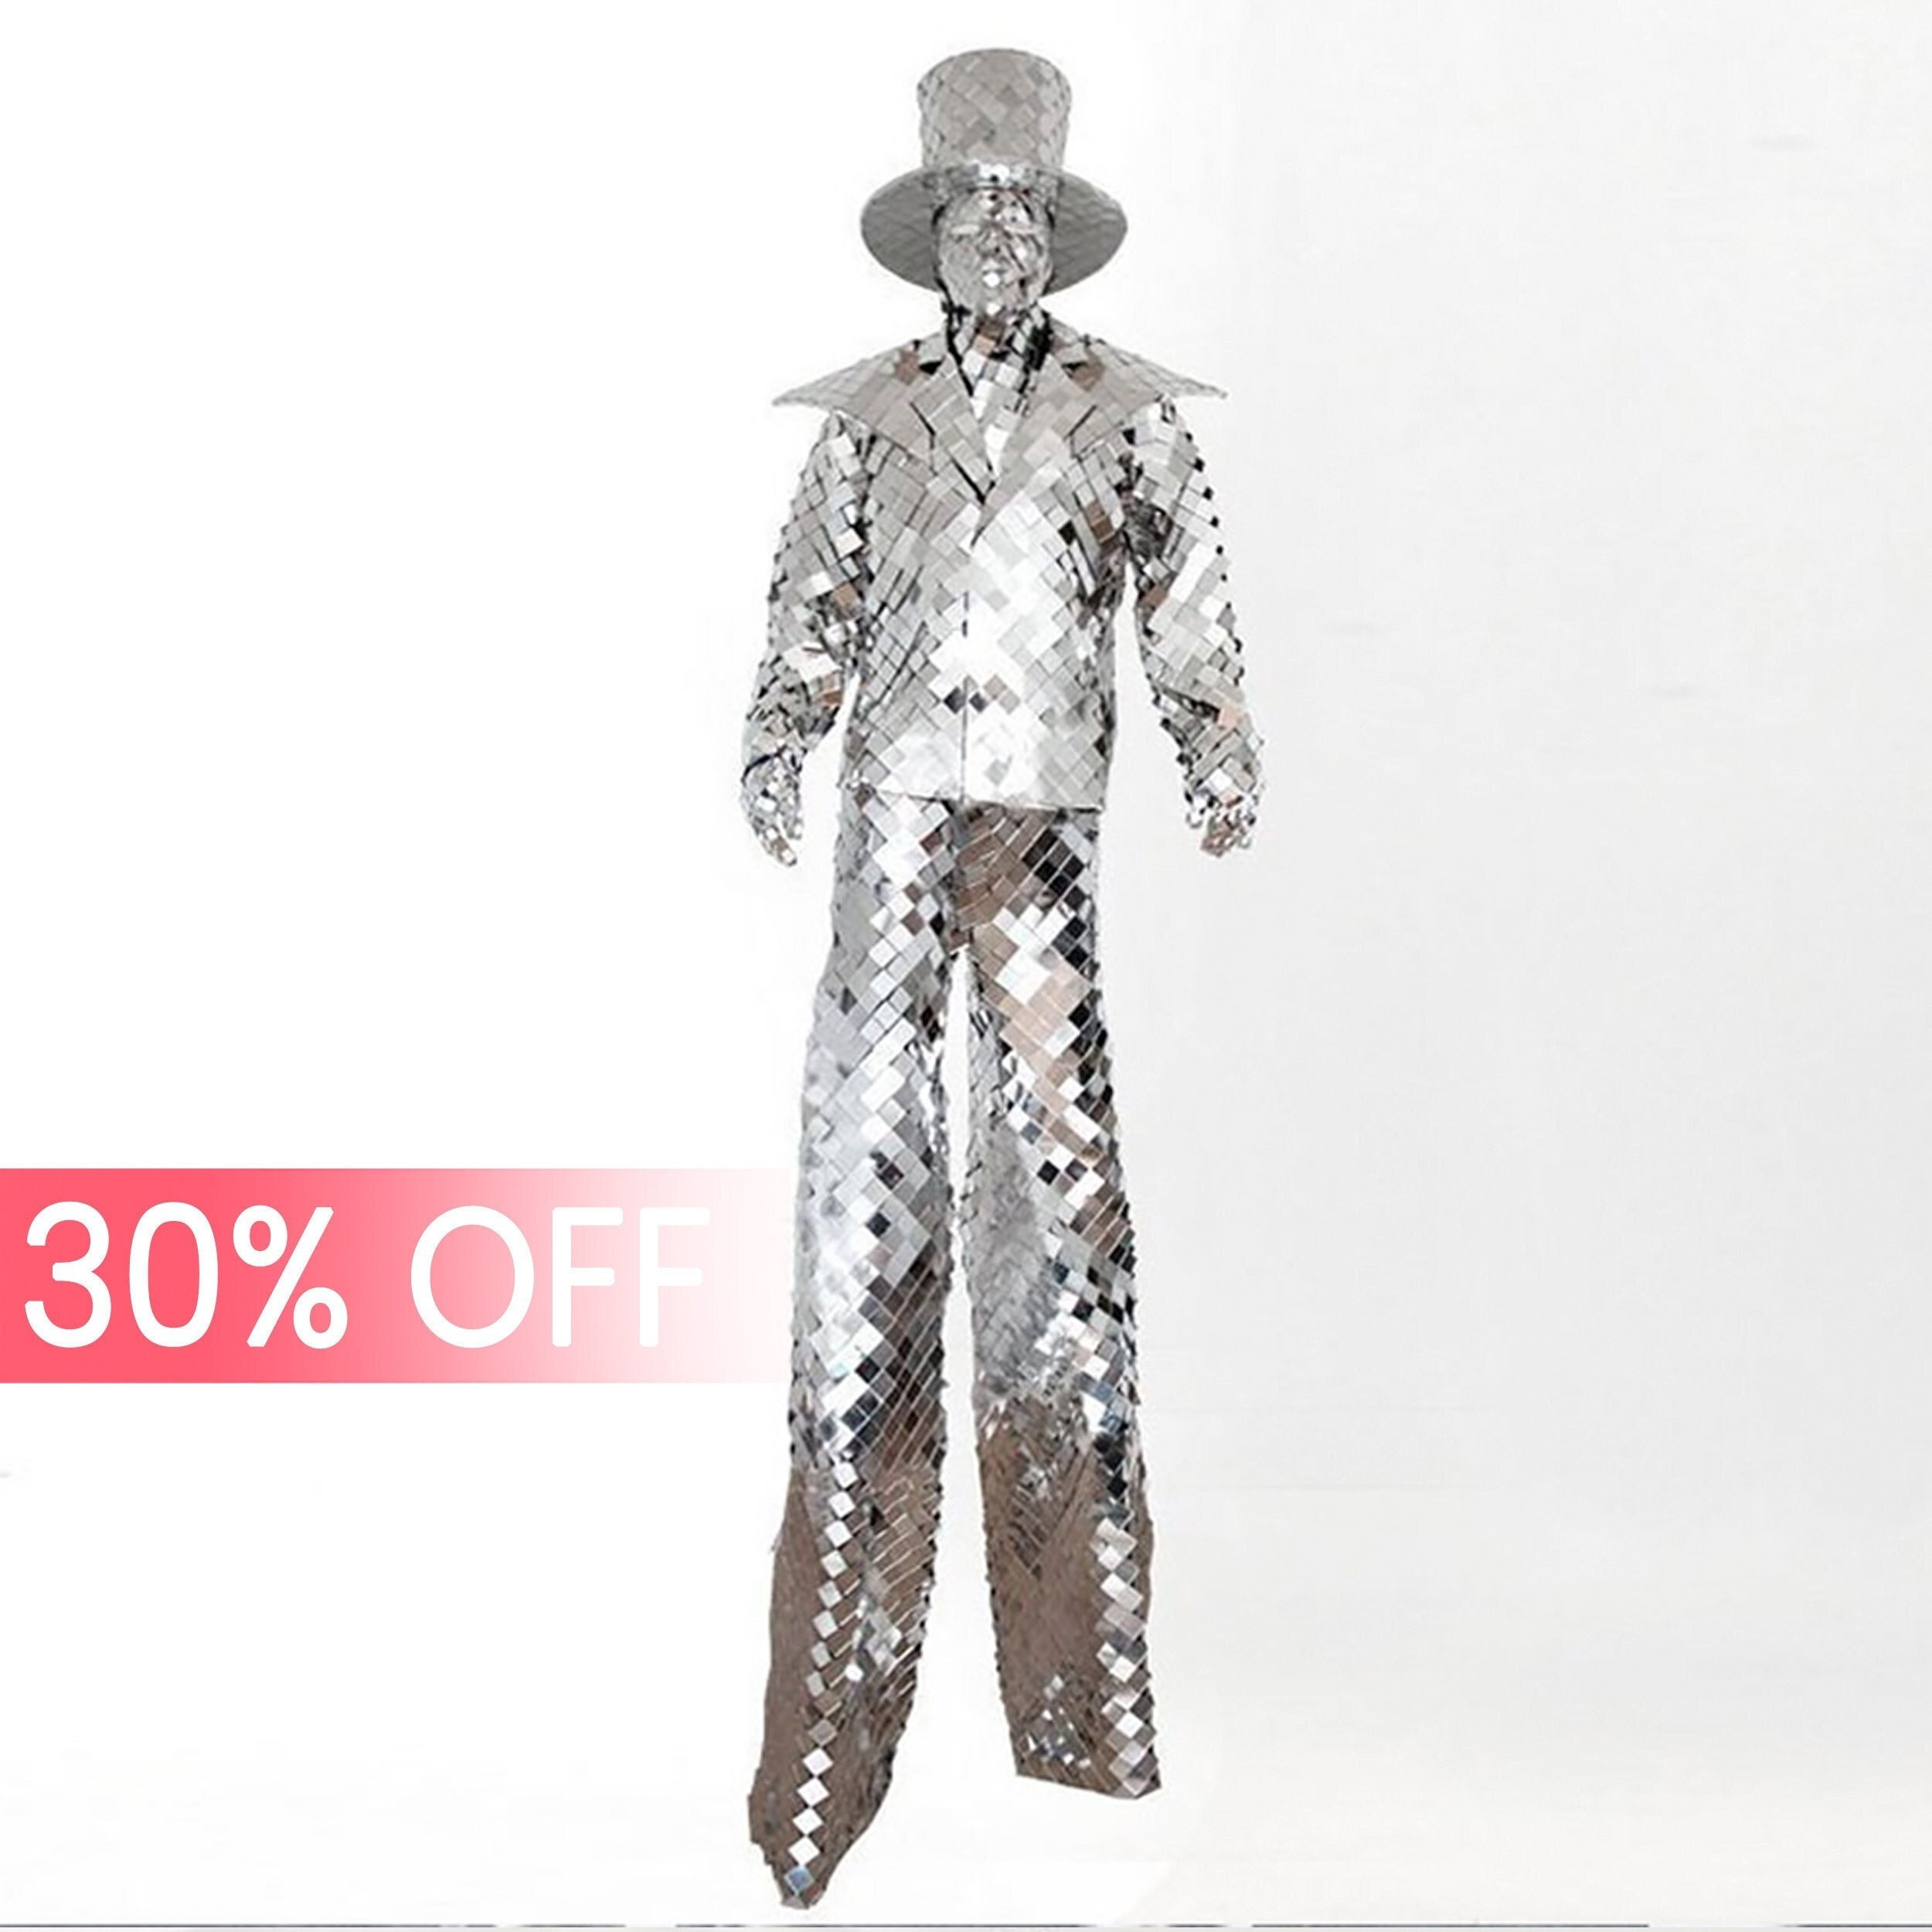 Glitter Sparkly Mirror Stilt Walker Costume Suit / Sequin square 2